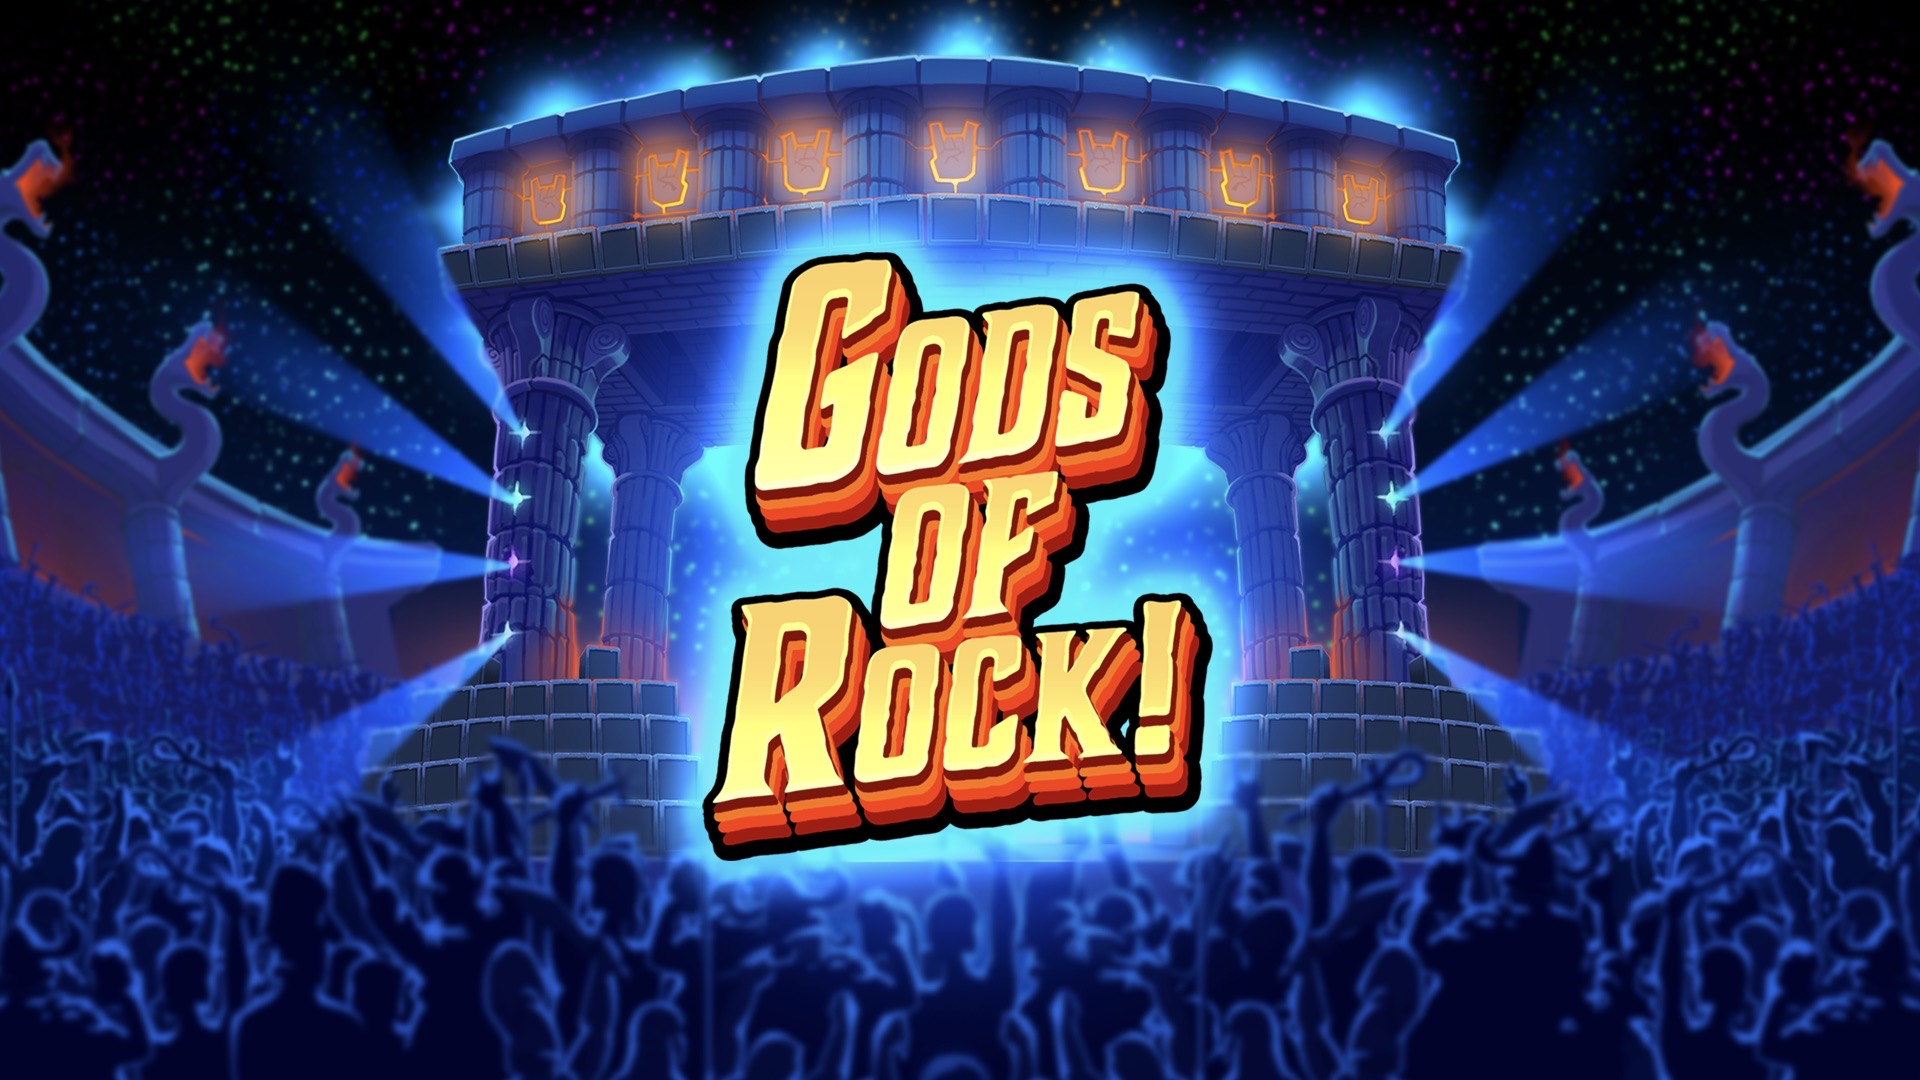 Gods of Rock video slot release by Thunderkick